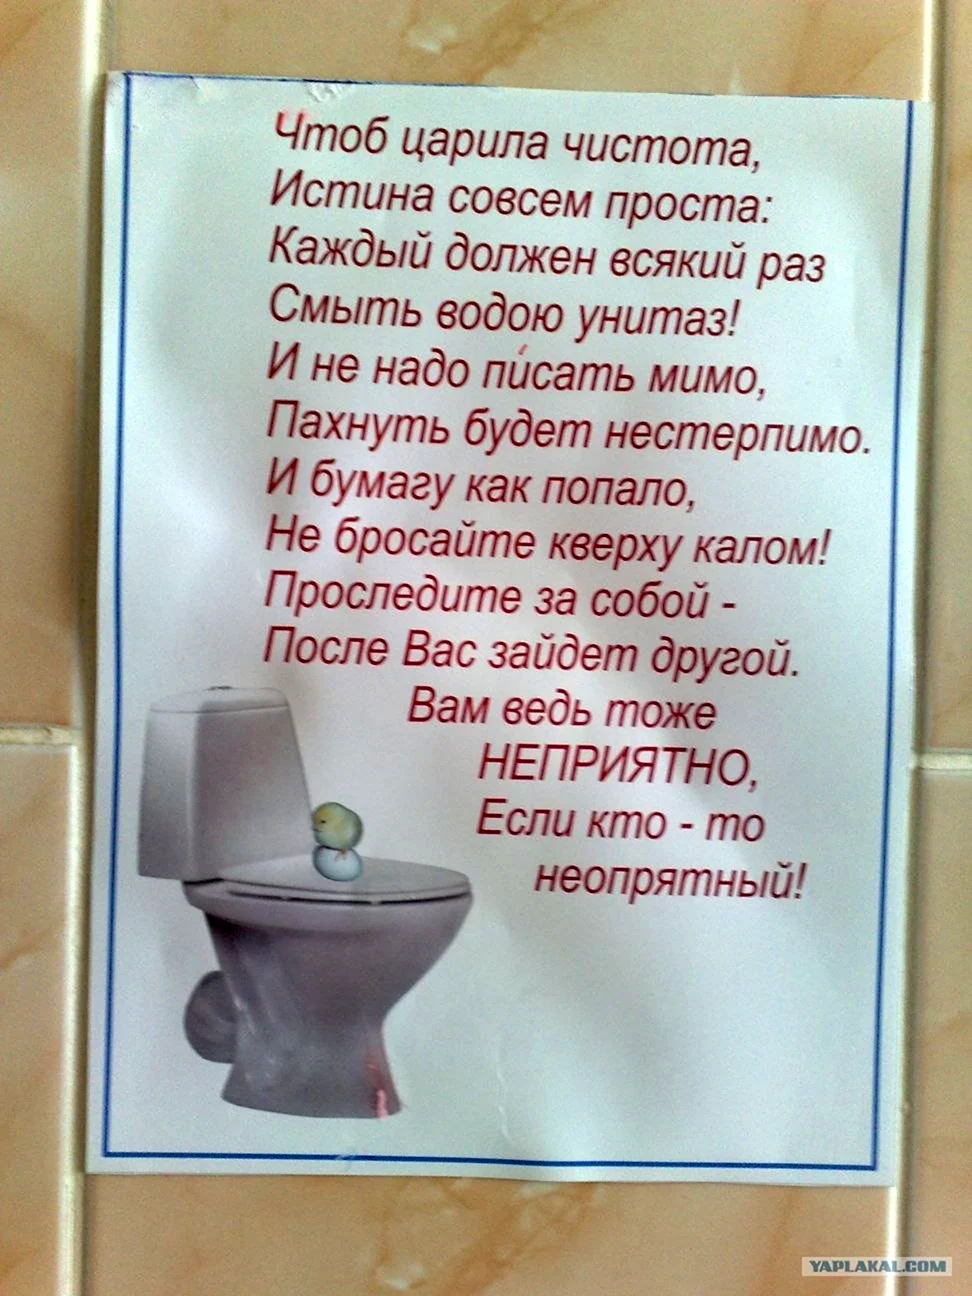 Объявление о чистоте в туалете. Стих про туалет. Стишки про туалет. Соблюдение чистоты в туалете.